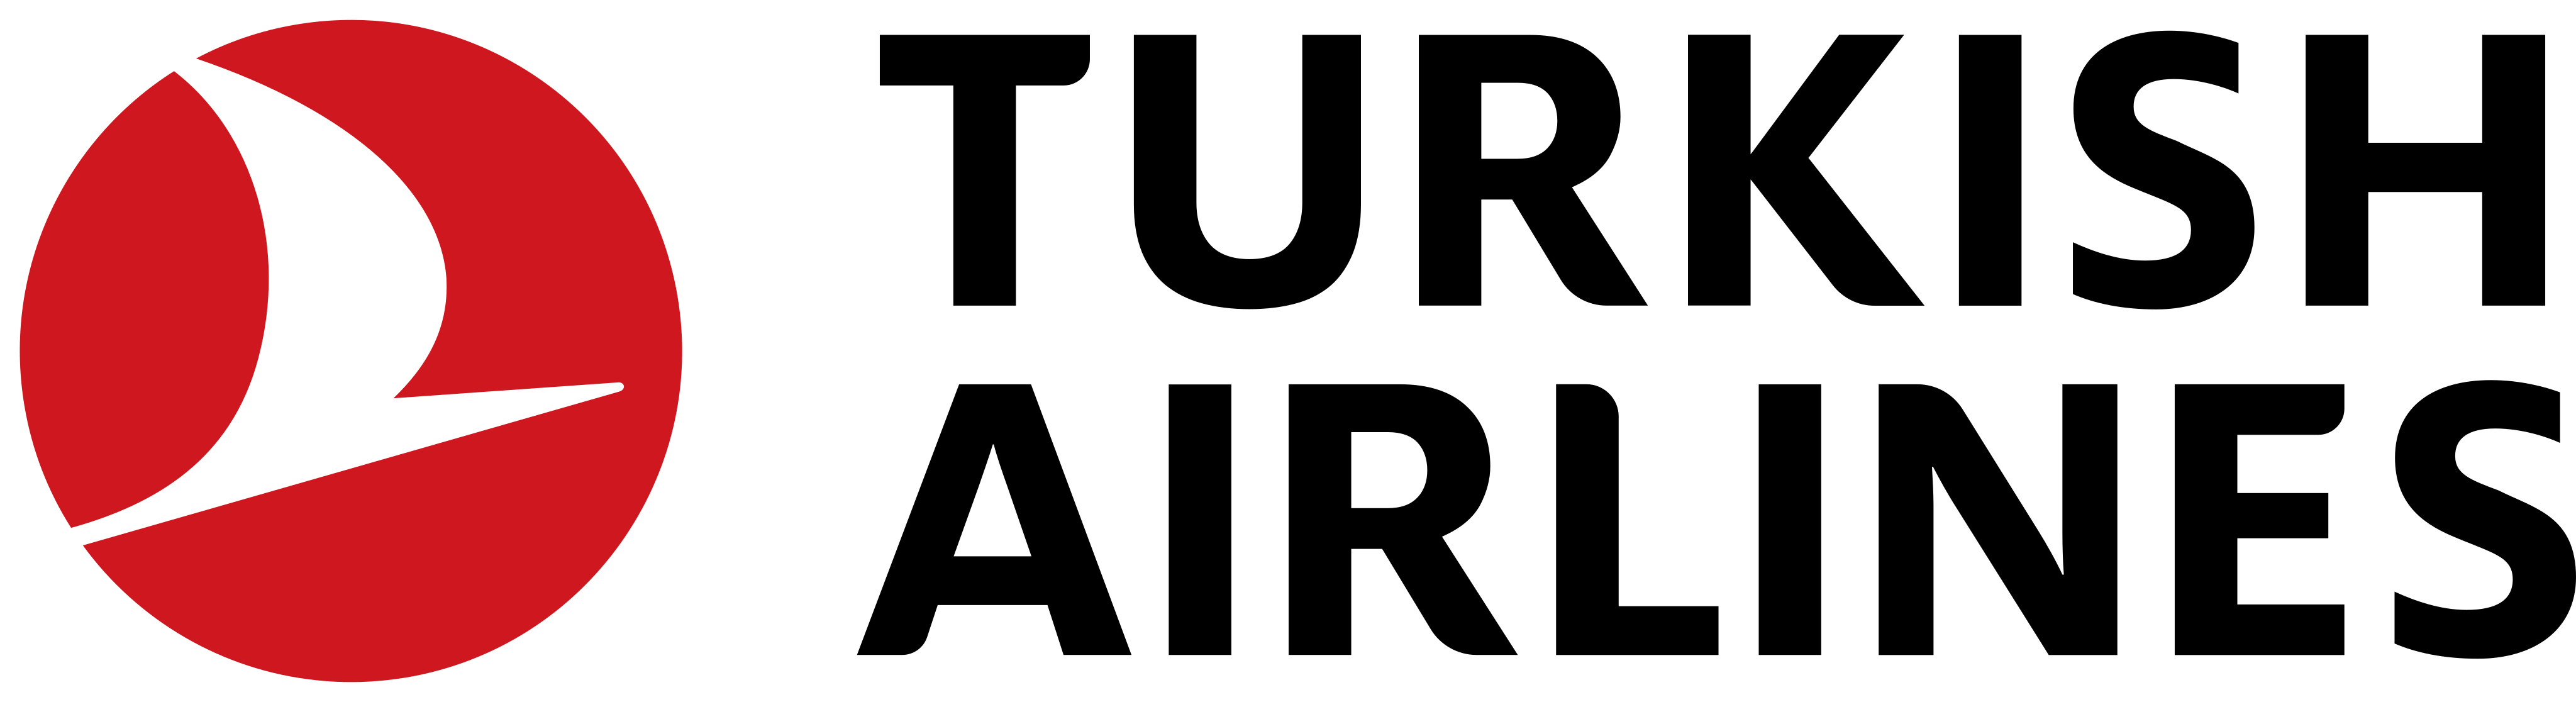 turkish-airlines-logo-1